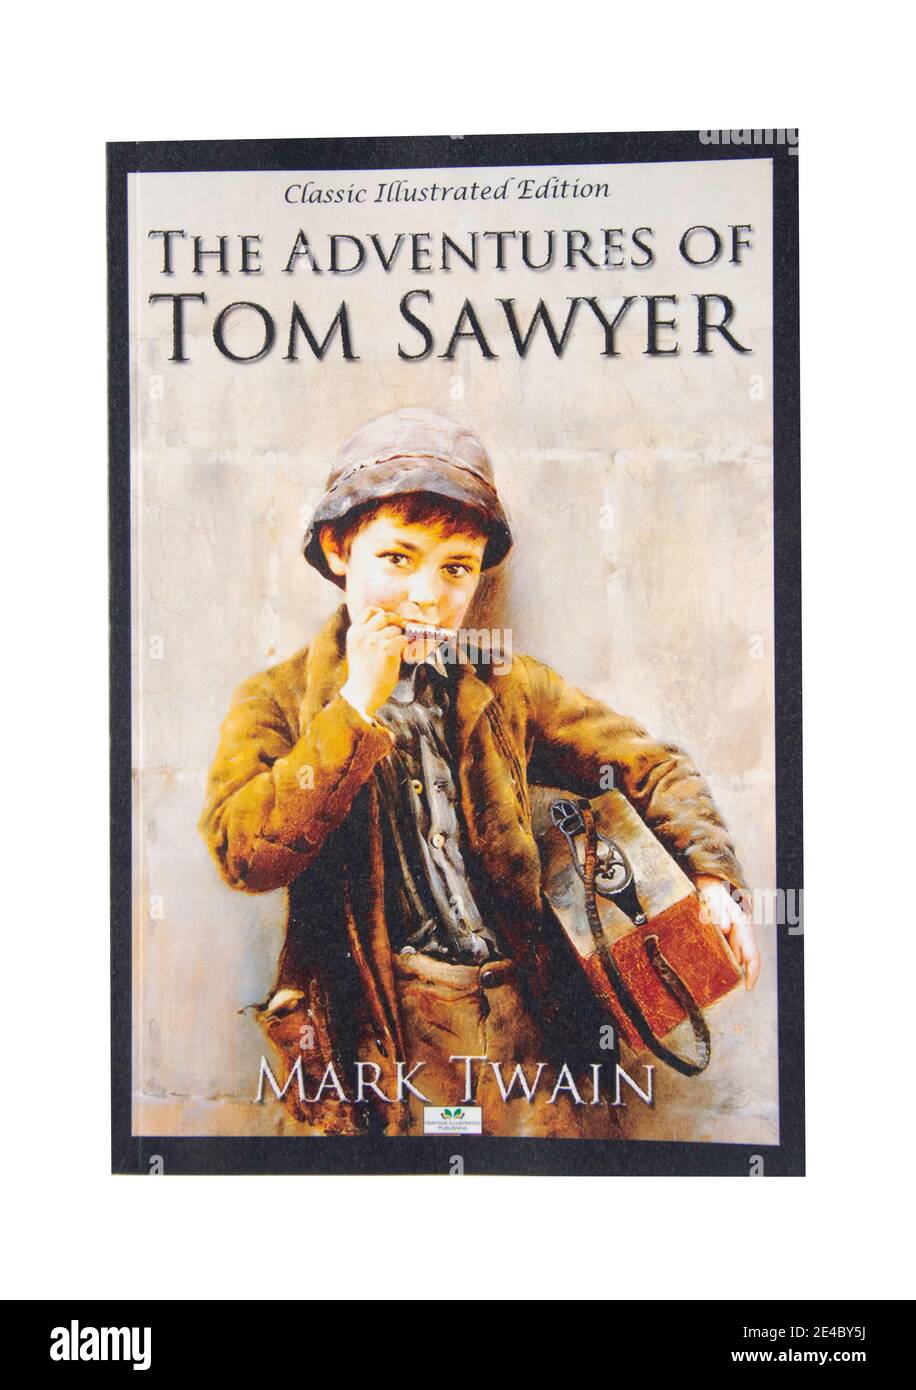 The Adventures of Tom Sawyer livre de Mark Twain, Grand Londres, Angleterre, Royaume-Uni Banque D'Images